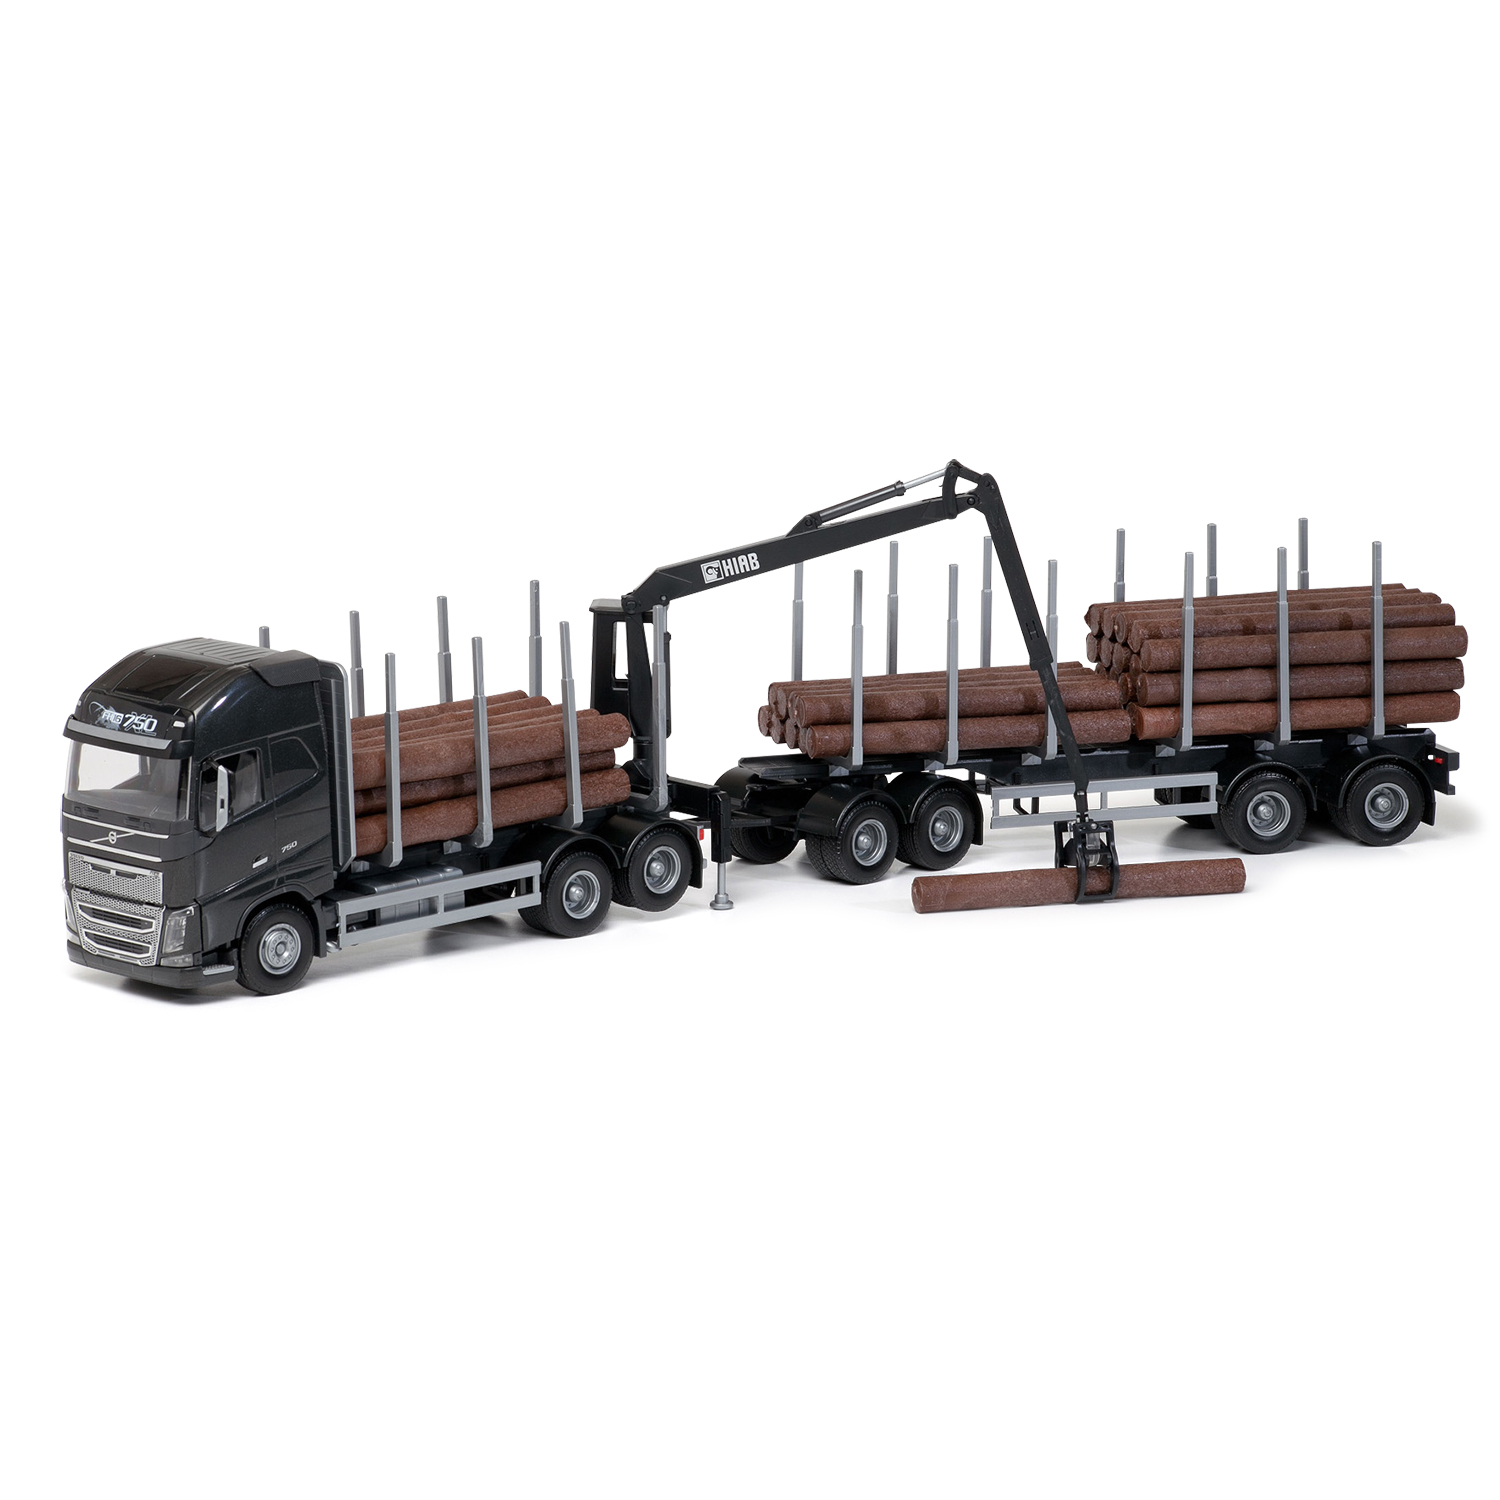 Work Vehicles emek toy car timber truck volvo fh16/750 black 1:25